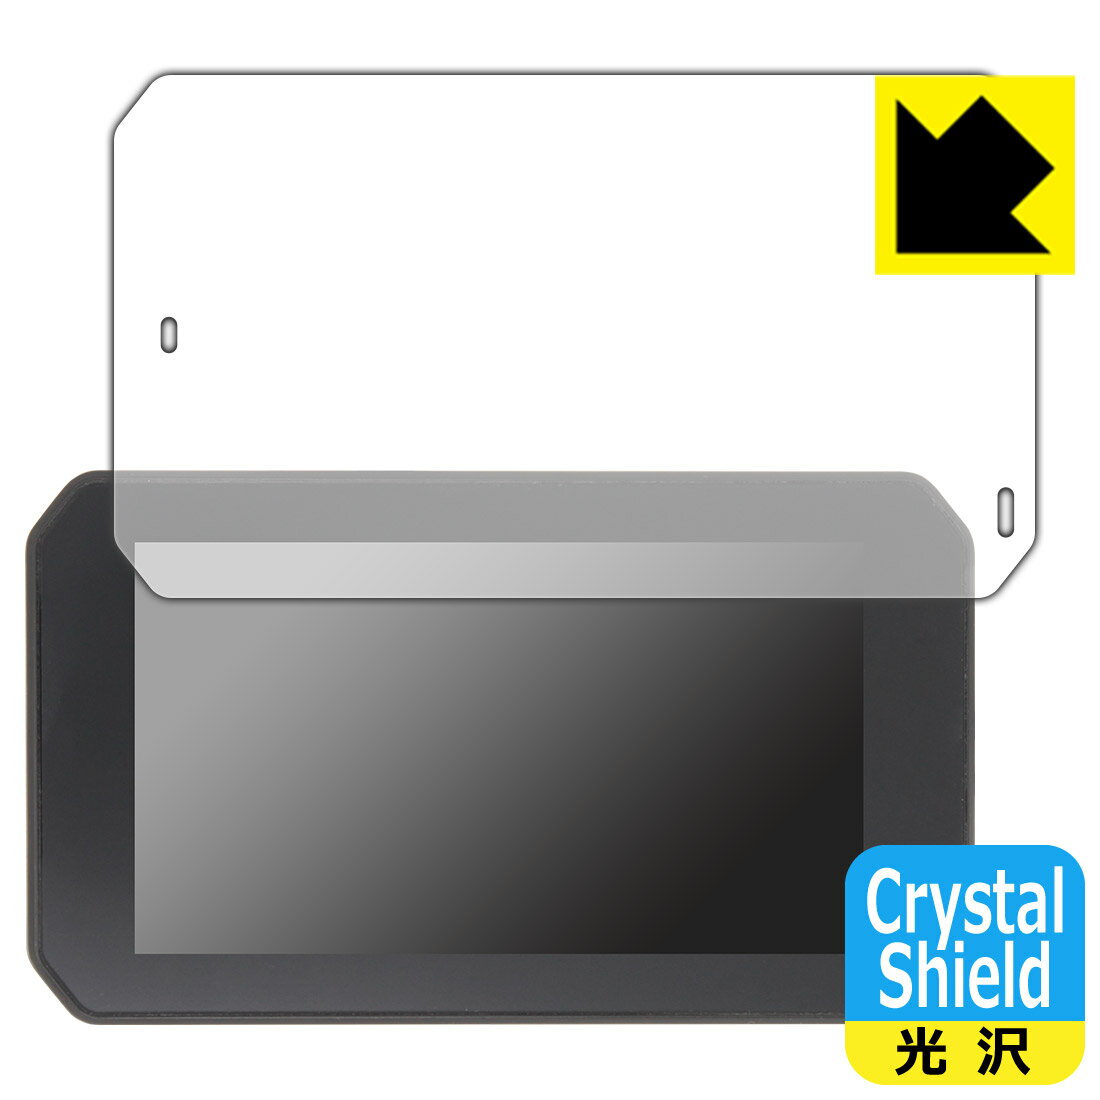 Crystal ShieldyzیtB Sunway 5C` oCNp GPSir P501/P501-D/P501-DT (3Zbg) { А